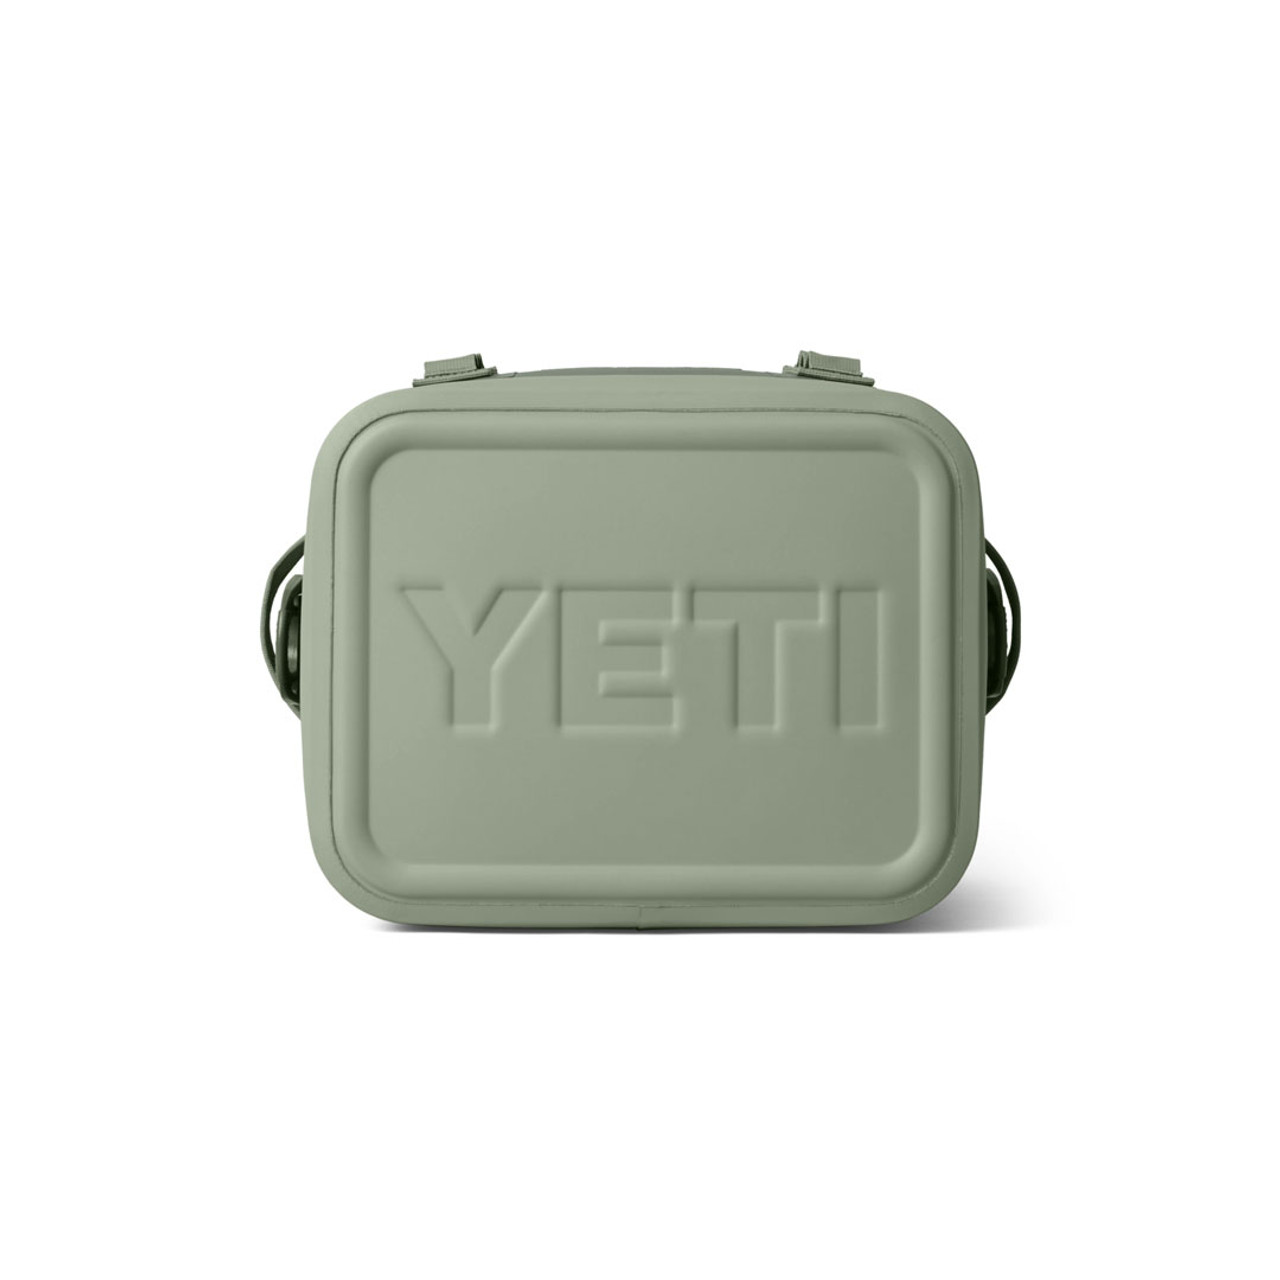 YETI / Hopper Flip 12 Soft Cooler - Sagebrush Green